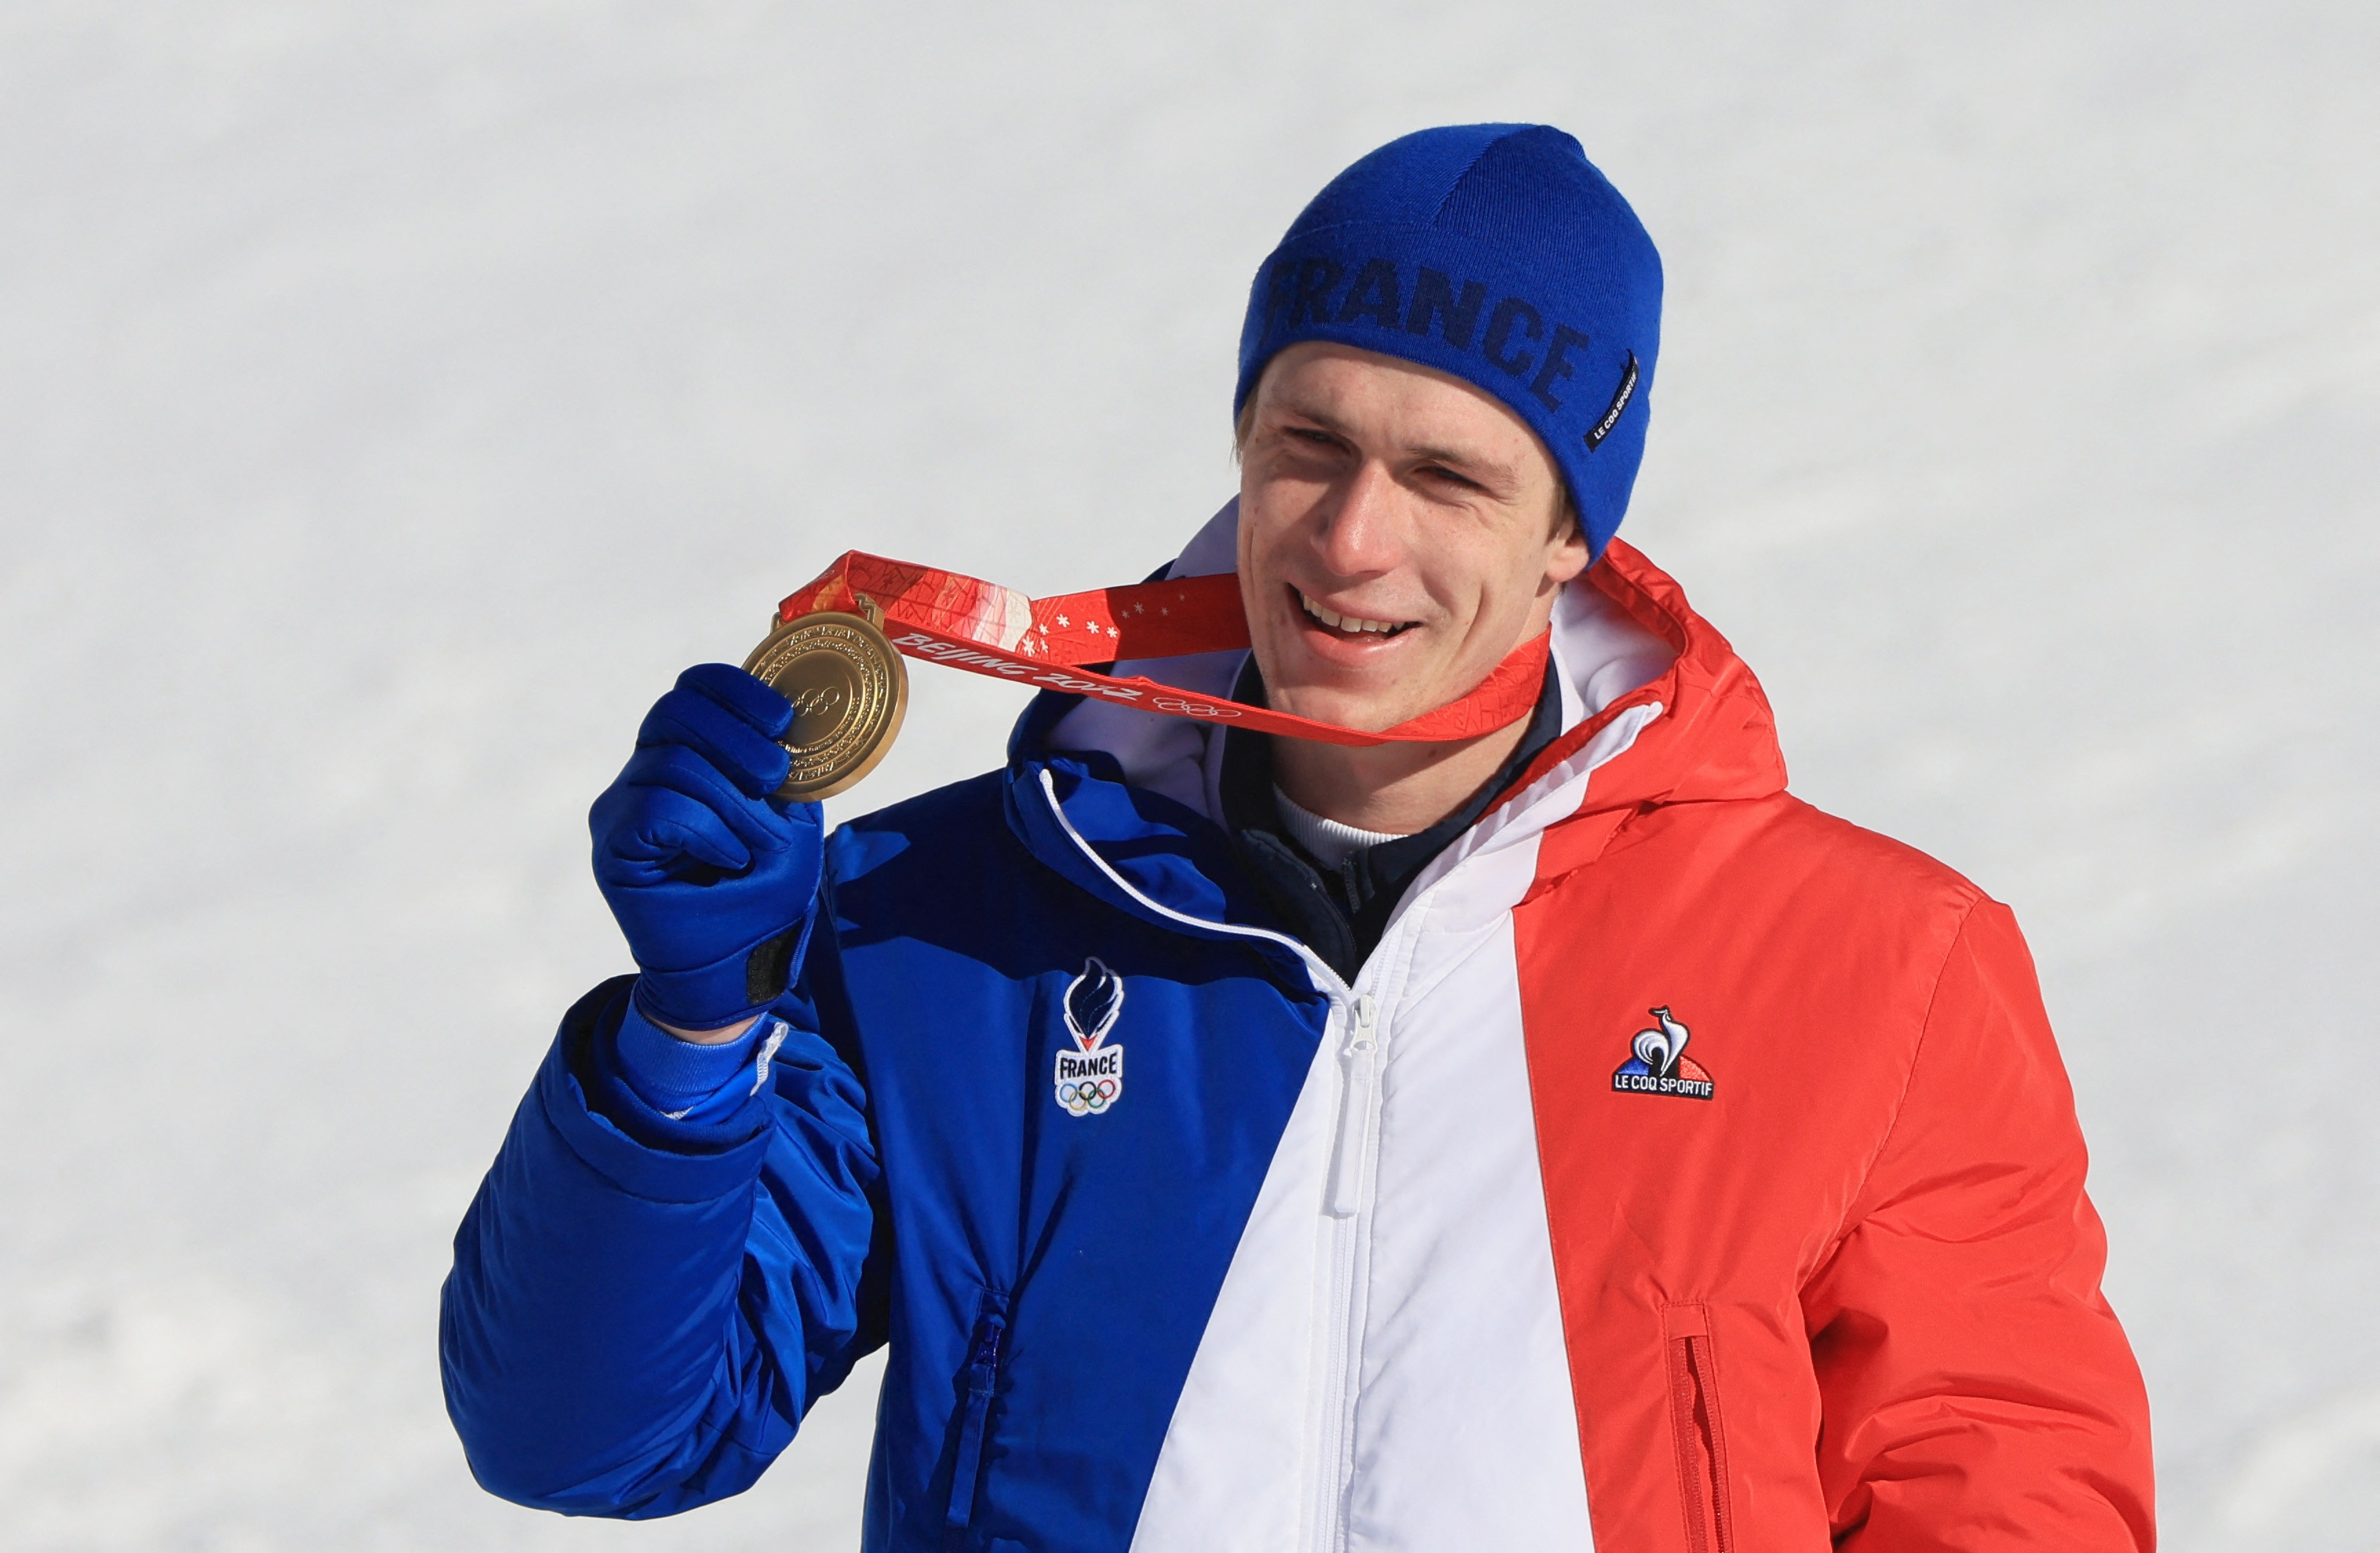 ‘One-shot’ Noel takes Olympic slalom gold for France